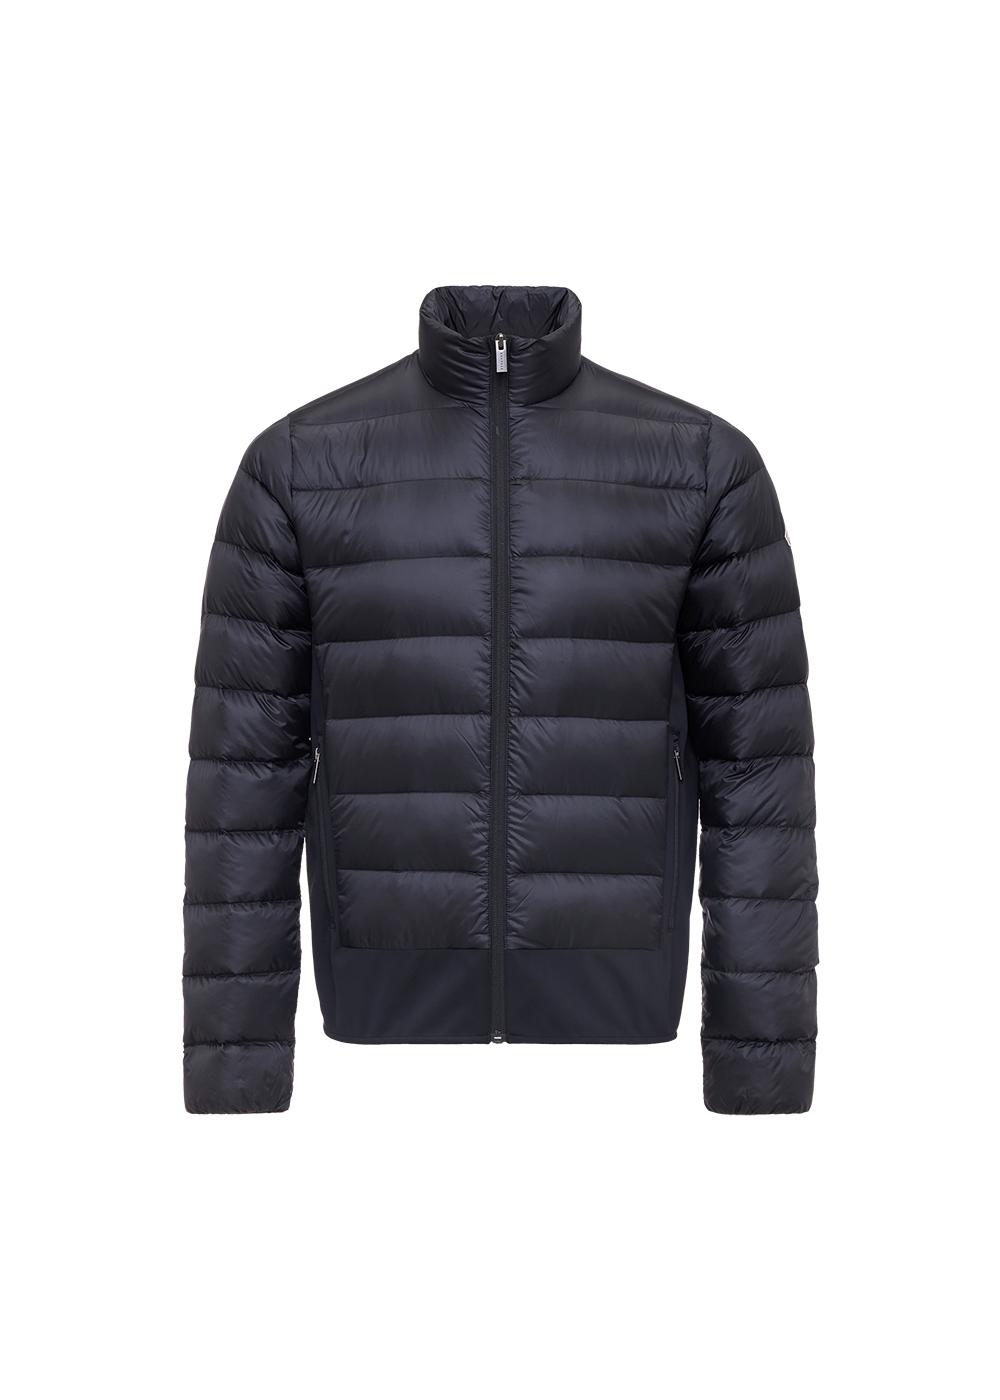 Men's Pyrenex Flow lighweight bi-fabric down jacket black-5